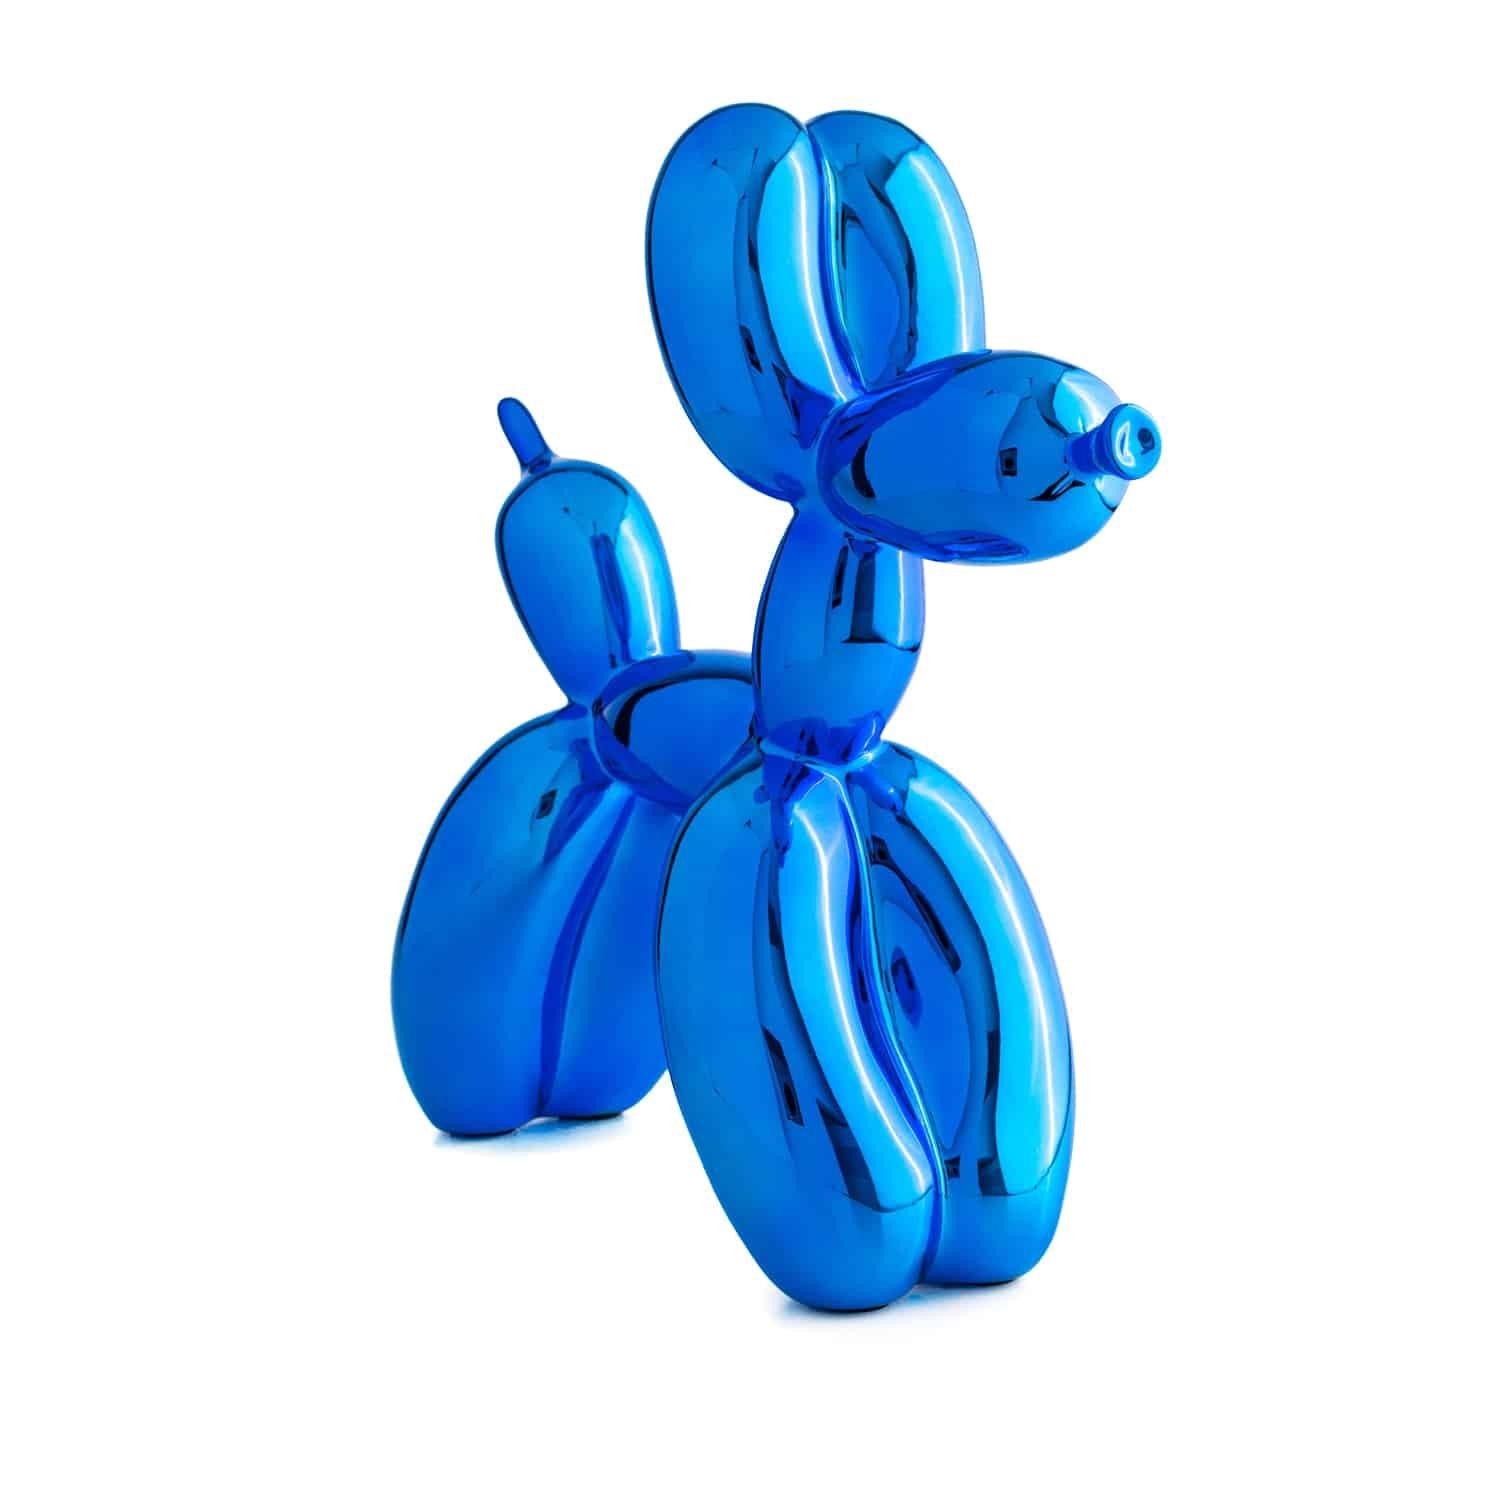 Balloon Dog ( After ) - Blue  - Pop Art Sculpture by After Jeff Koons